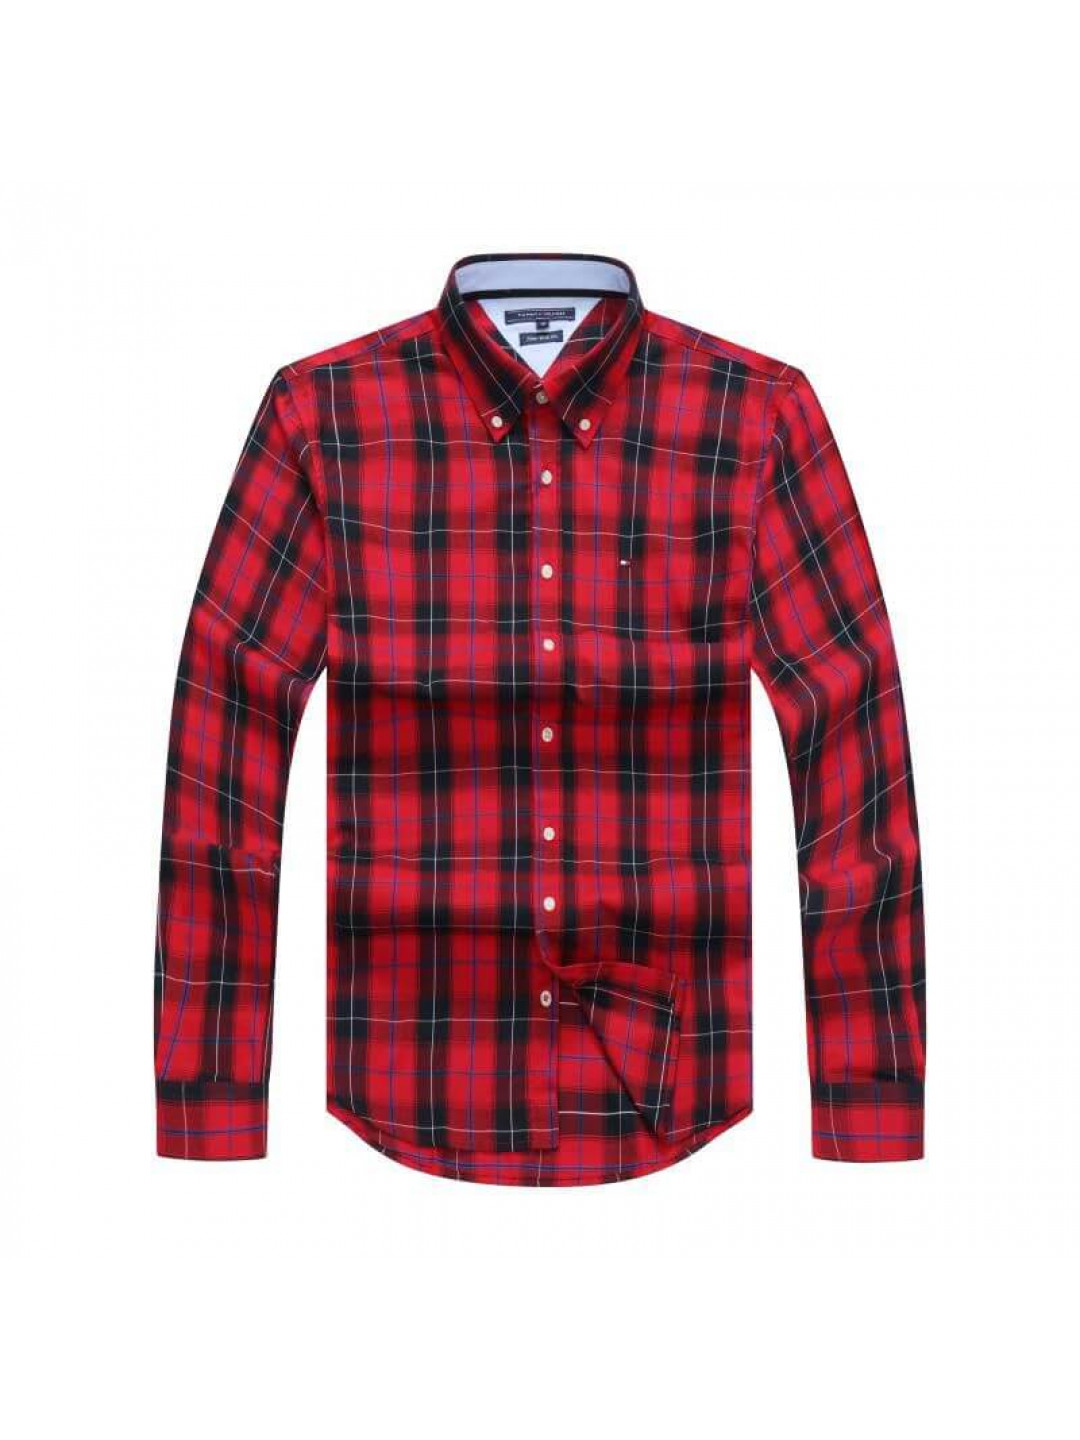 Shop Online for Tommy Hilfiger Plaid Multicoloured Oxford LS Shirt ...